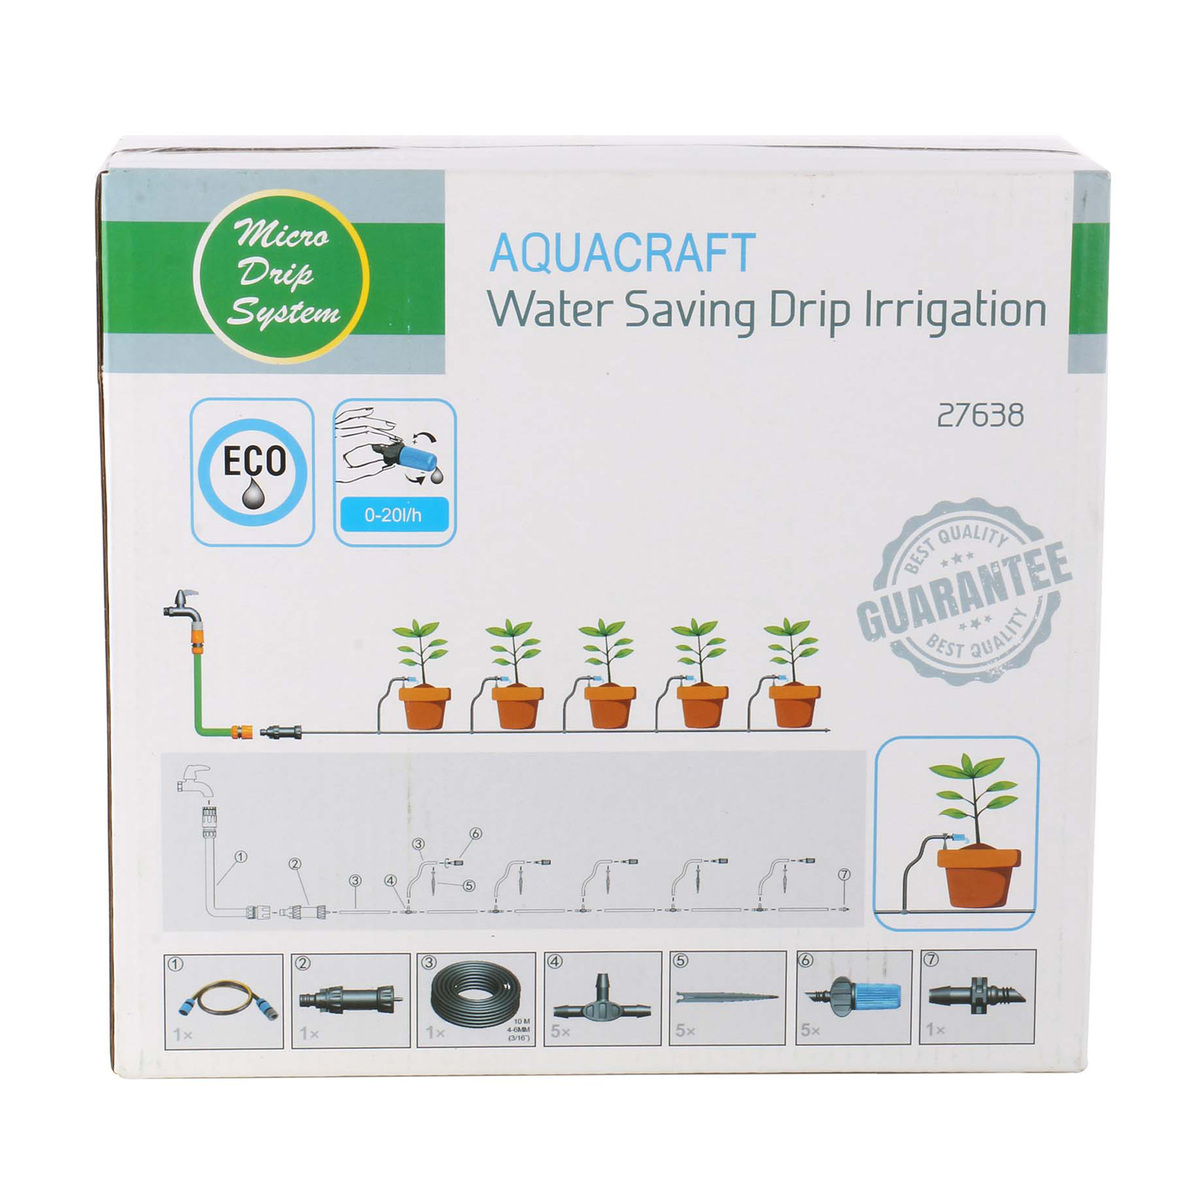 Aqua Craft Water Saving Drip Irrigation, 27638